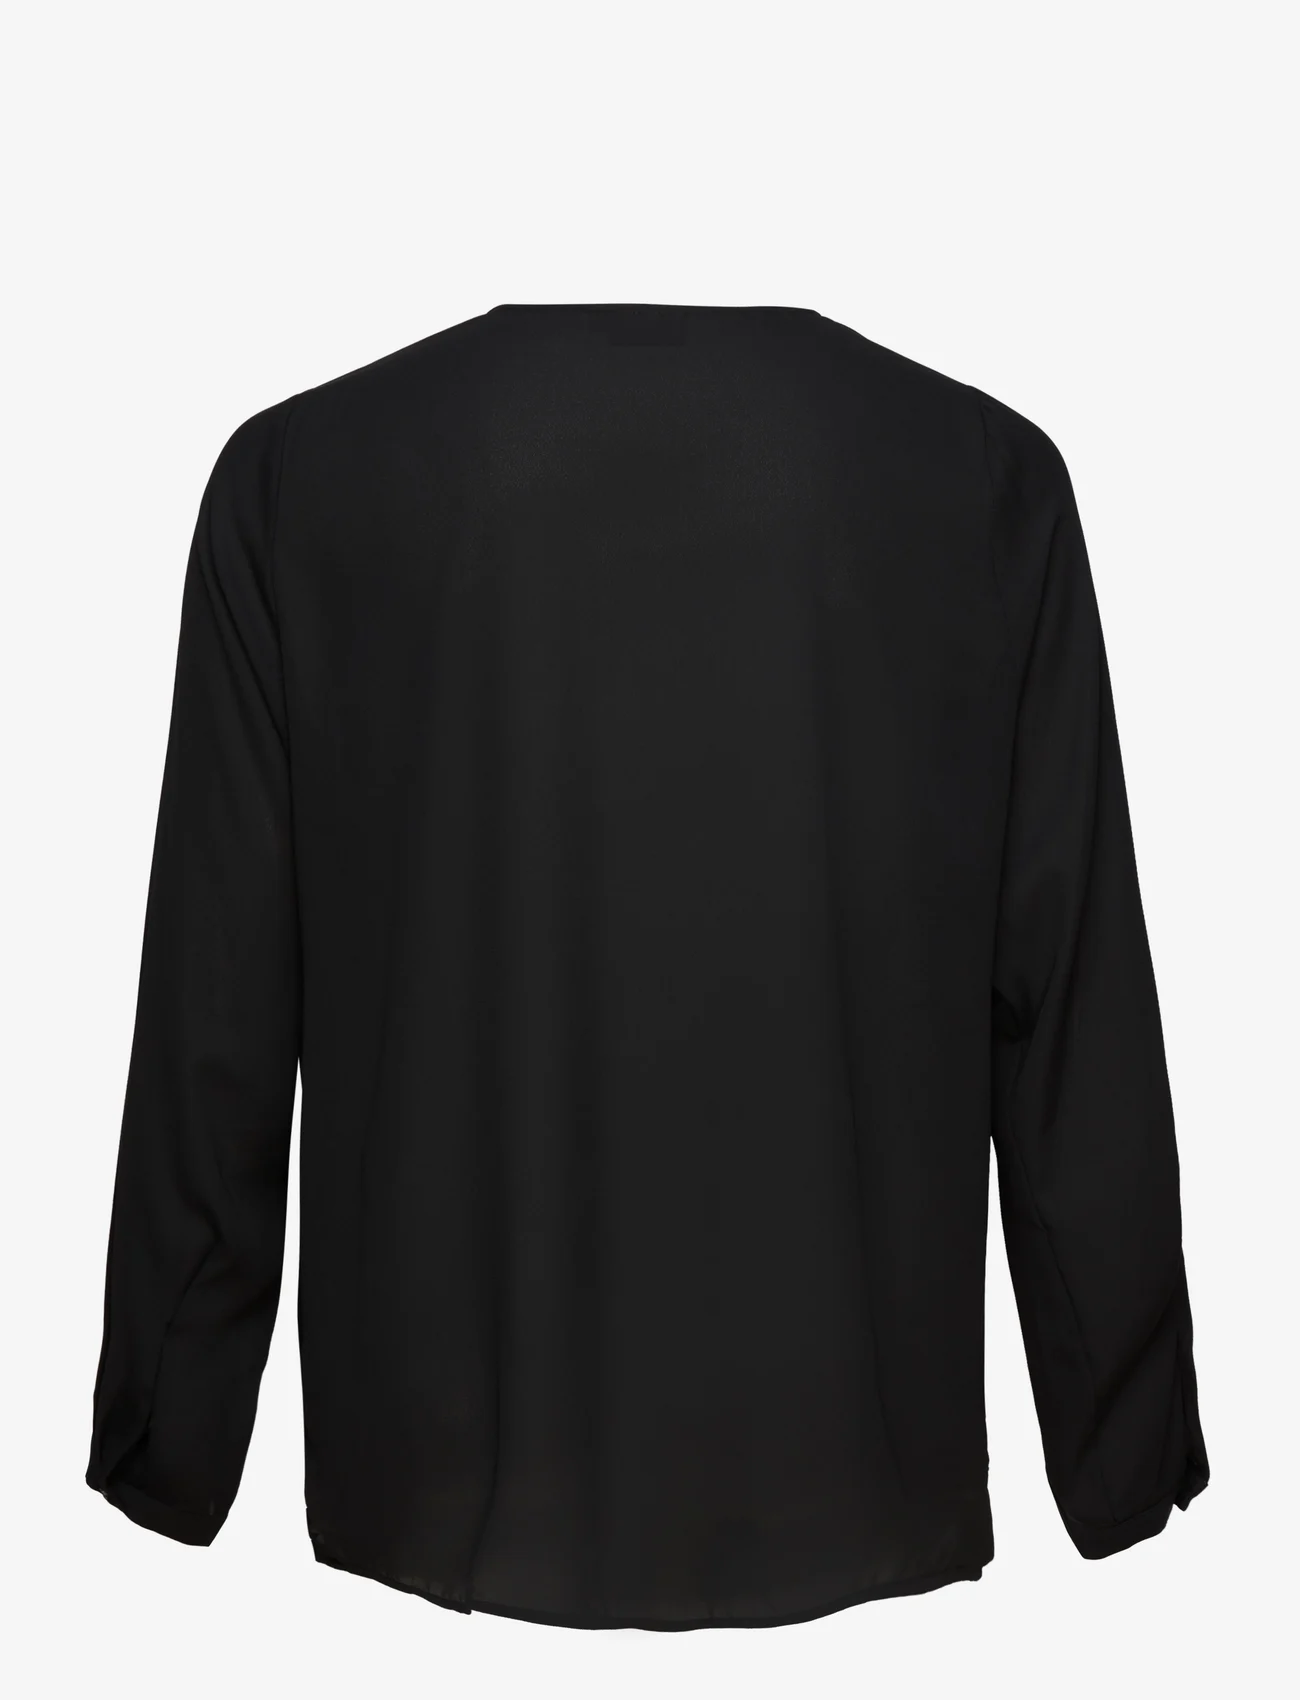 Zizzi - VSELI, L/S, SHIRT - langärmlige hemden - black - 1